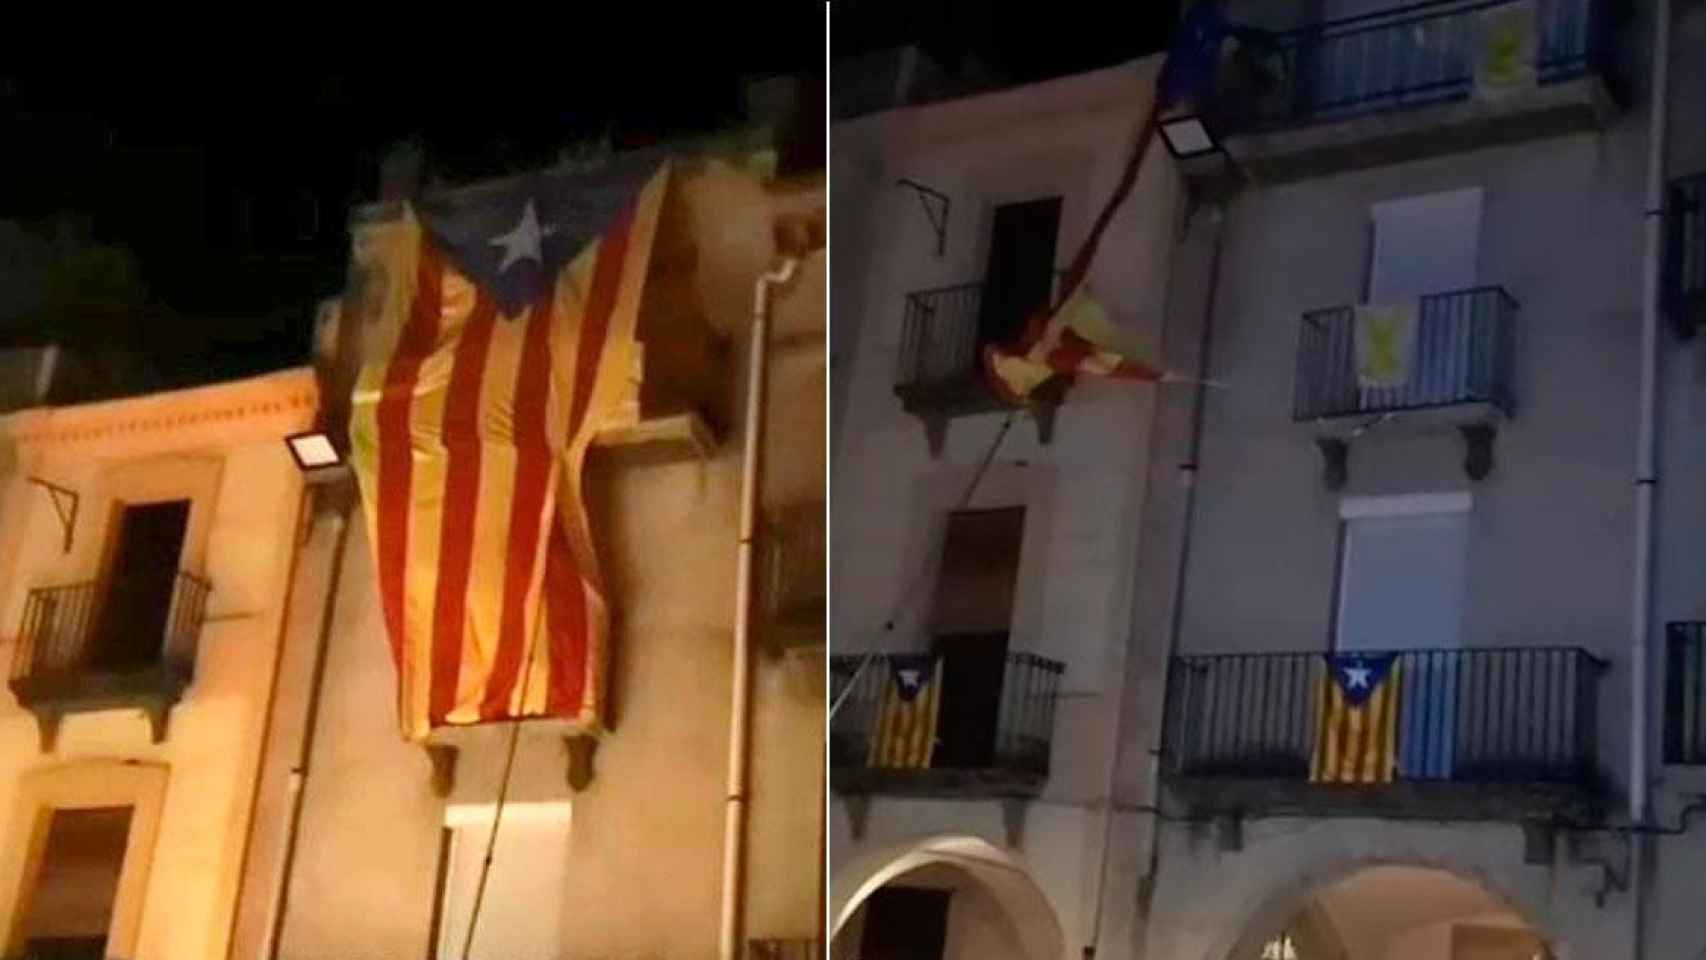 Amer, pueblo de Puigdemont, donde se retiraron símbolos independentistas / TWITTER